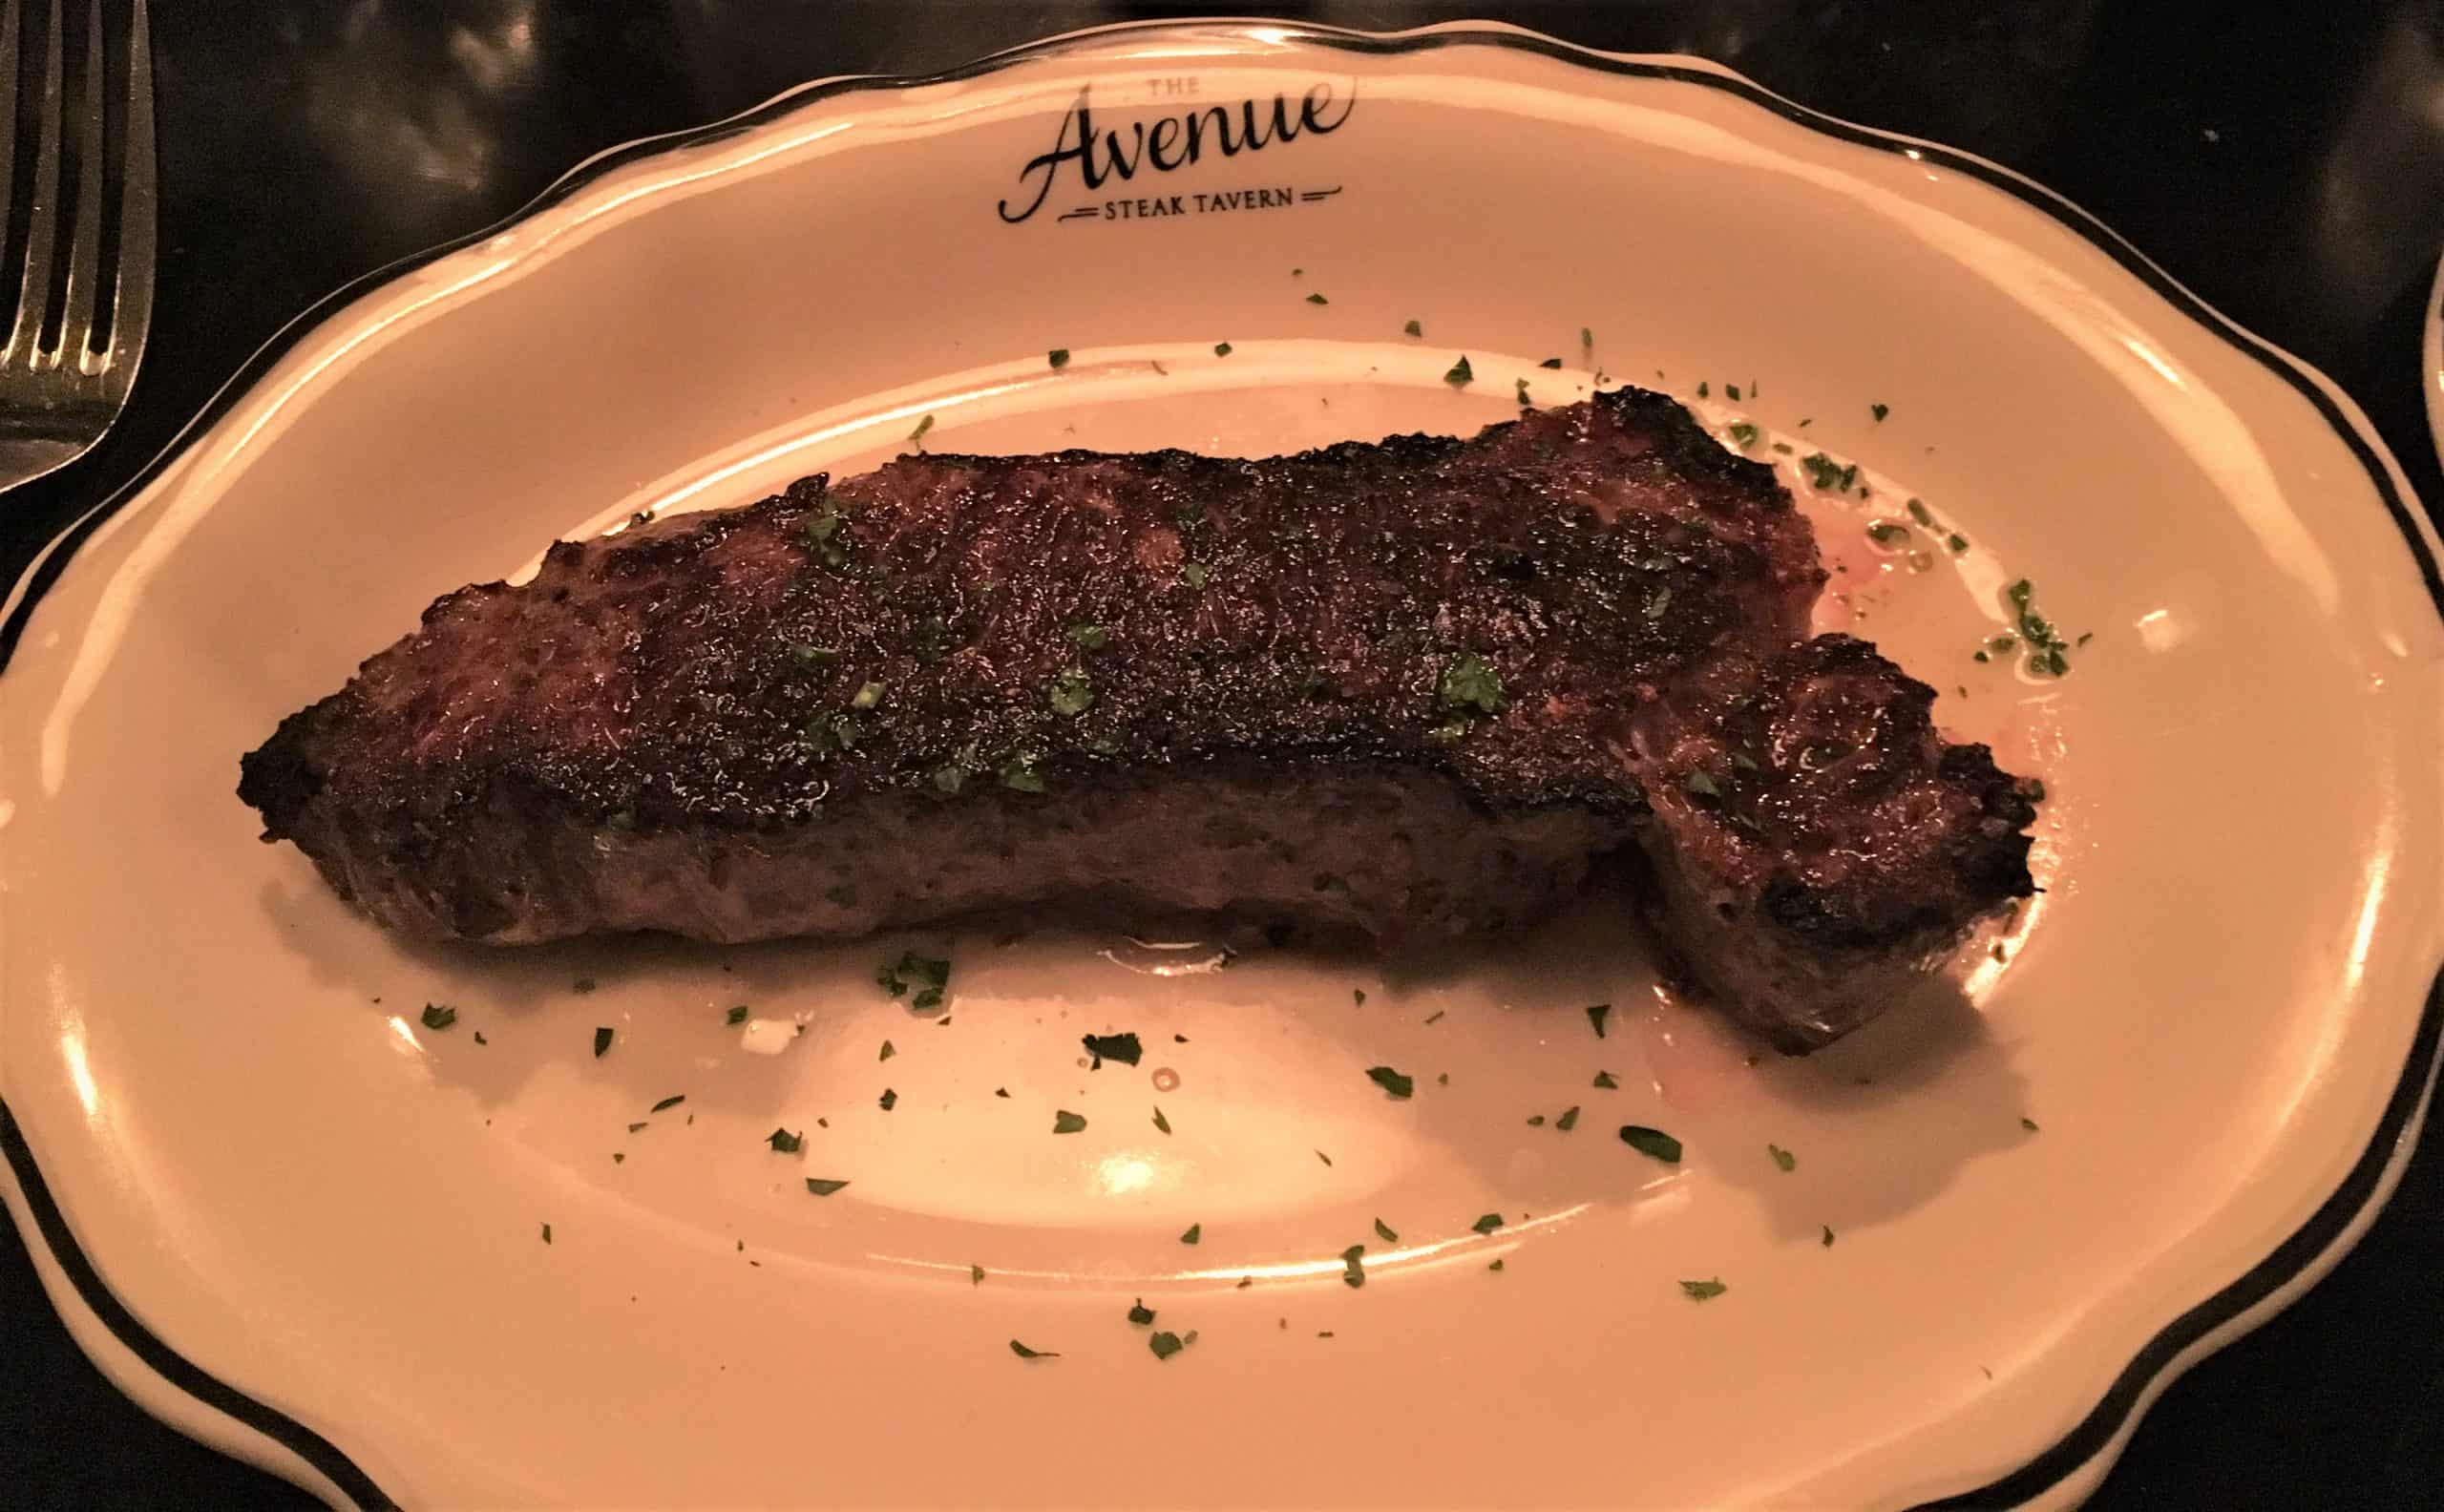  The Avenue  Steak Tavern in Dublin  Ohio The Yums